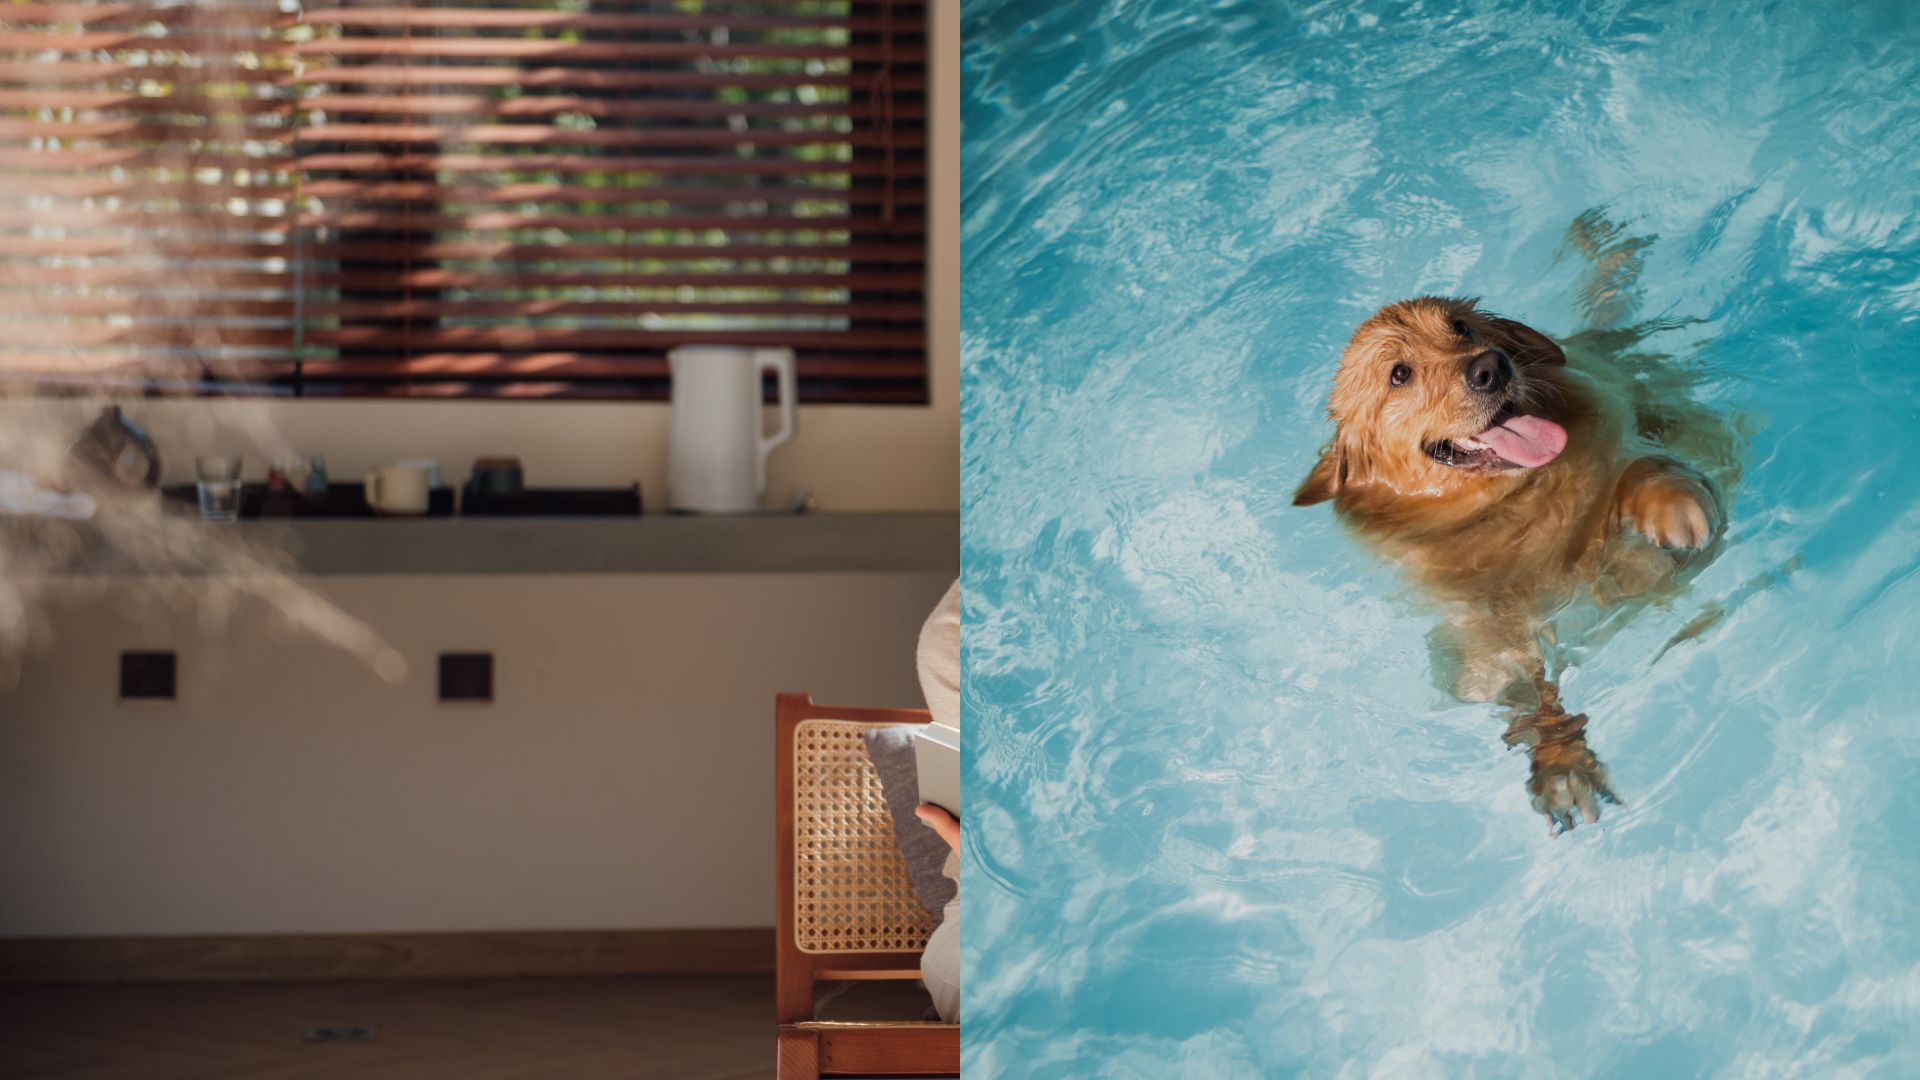 Dog in pool